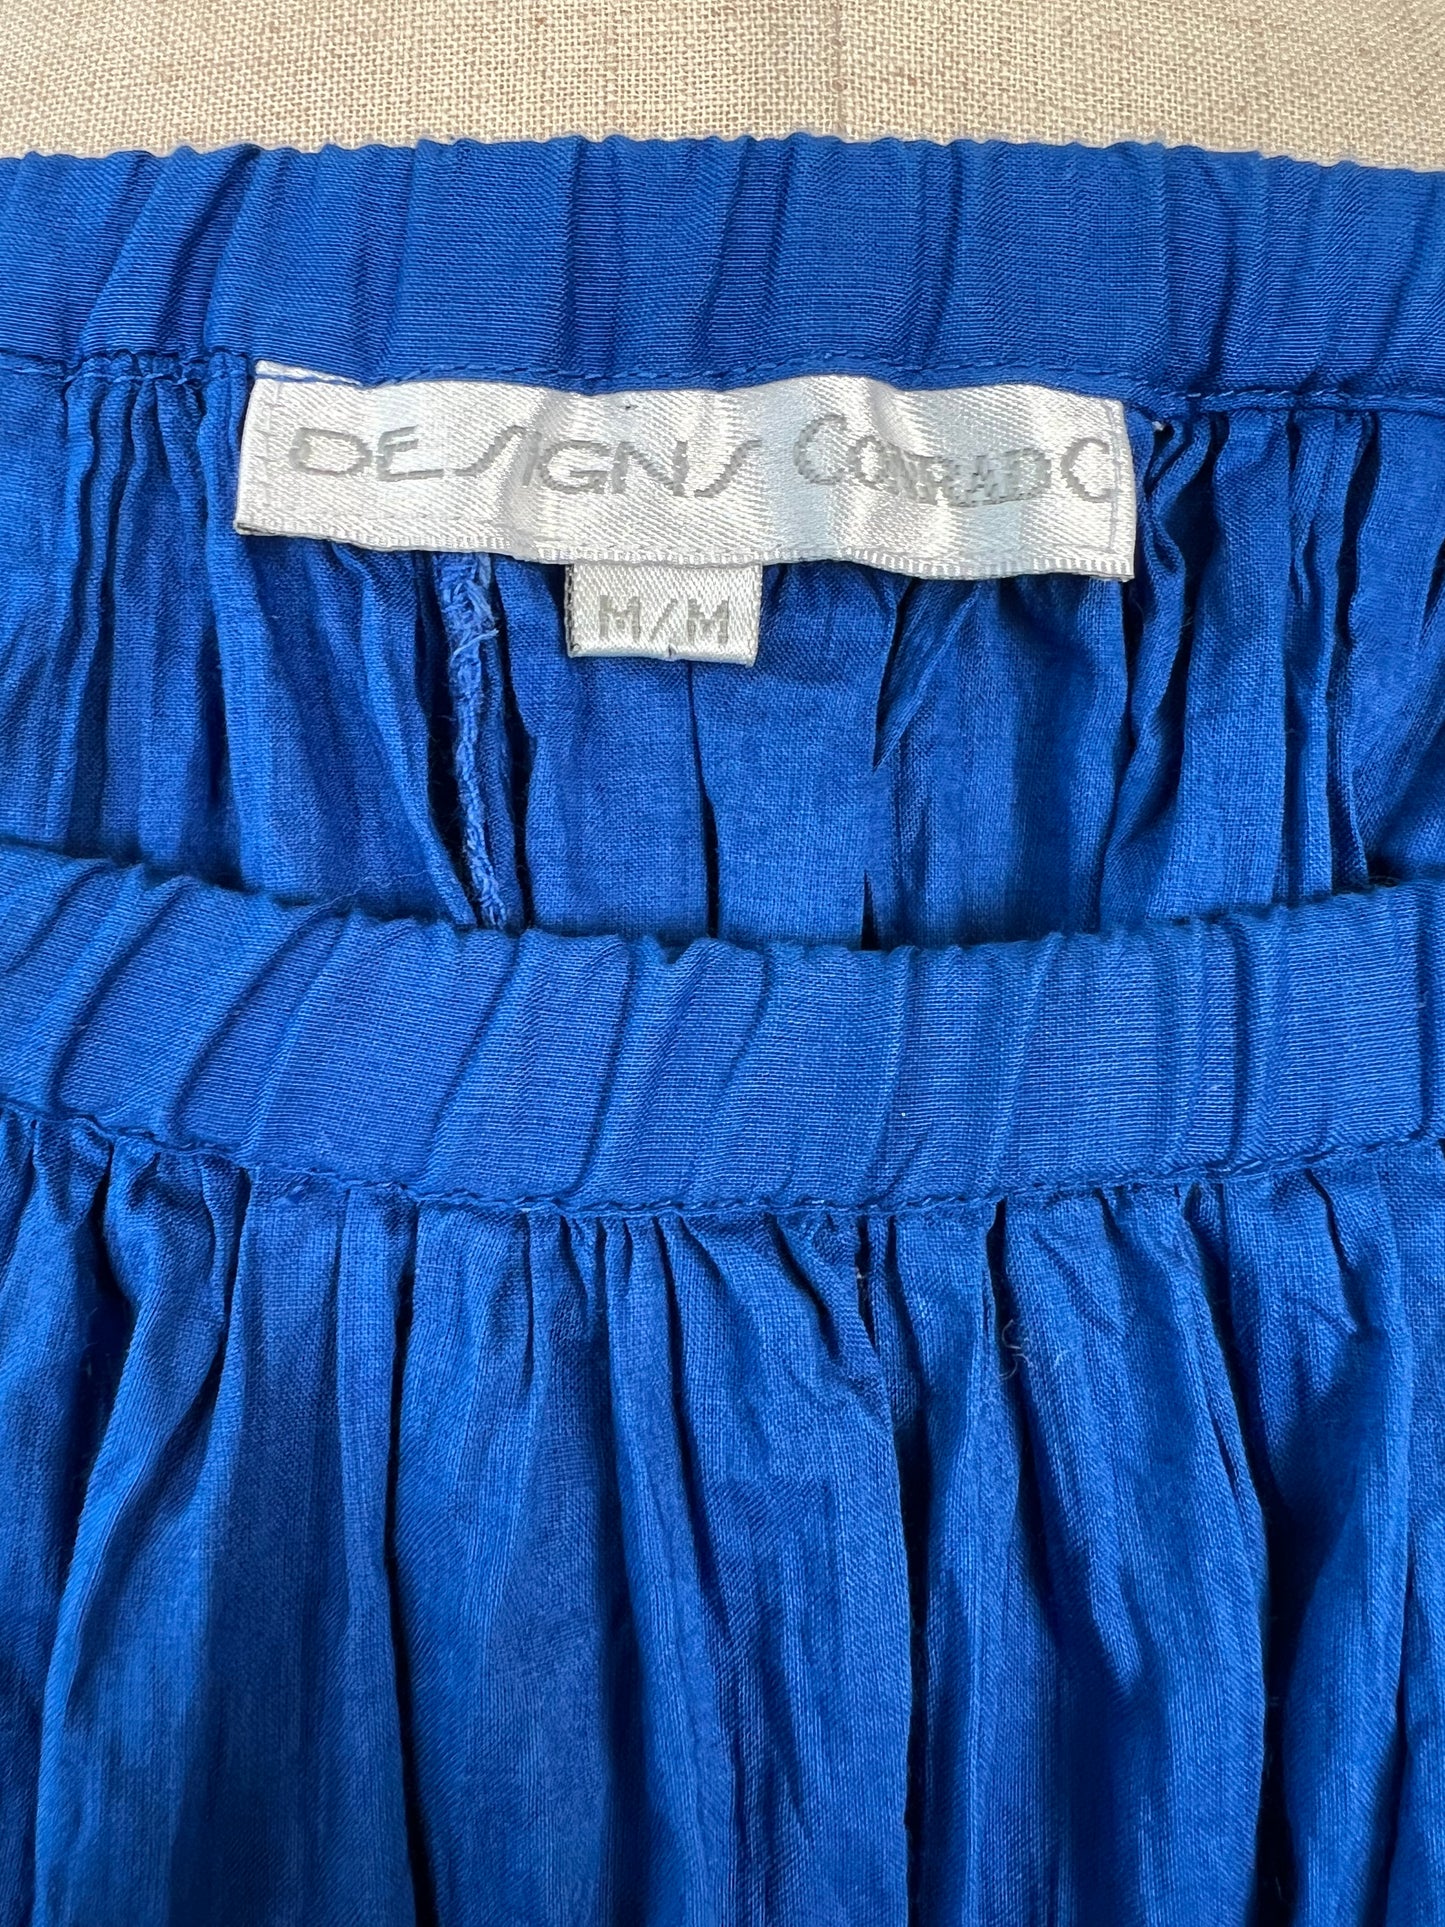 Jupe vintage plissée bleu cobalt à broderies (XL)